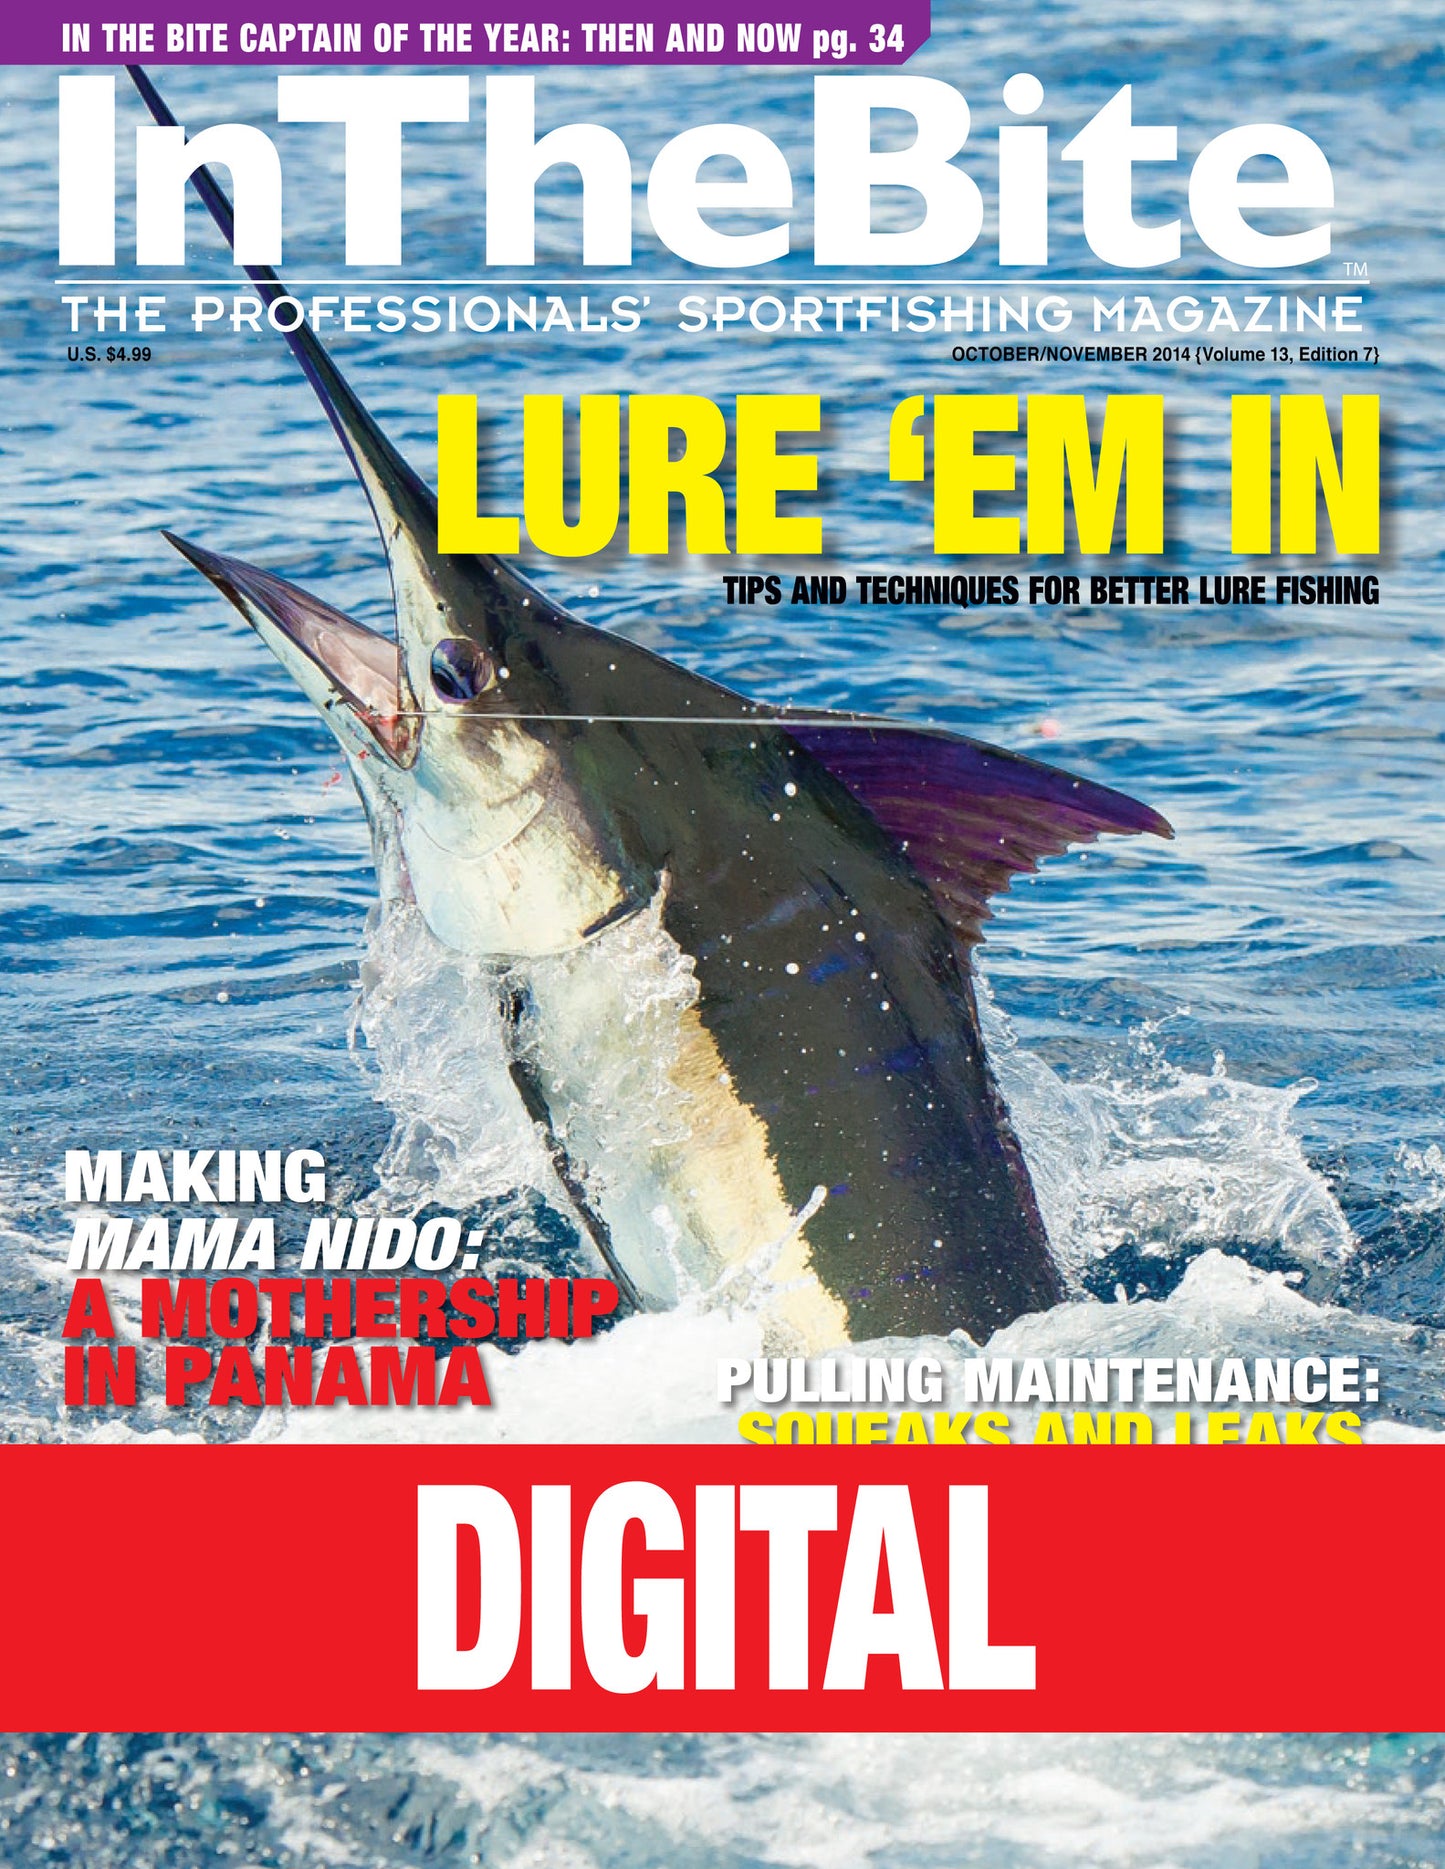 InTheBite Volume 13 Edition 07 - October/November 2014 - Digital Edition